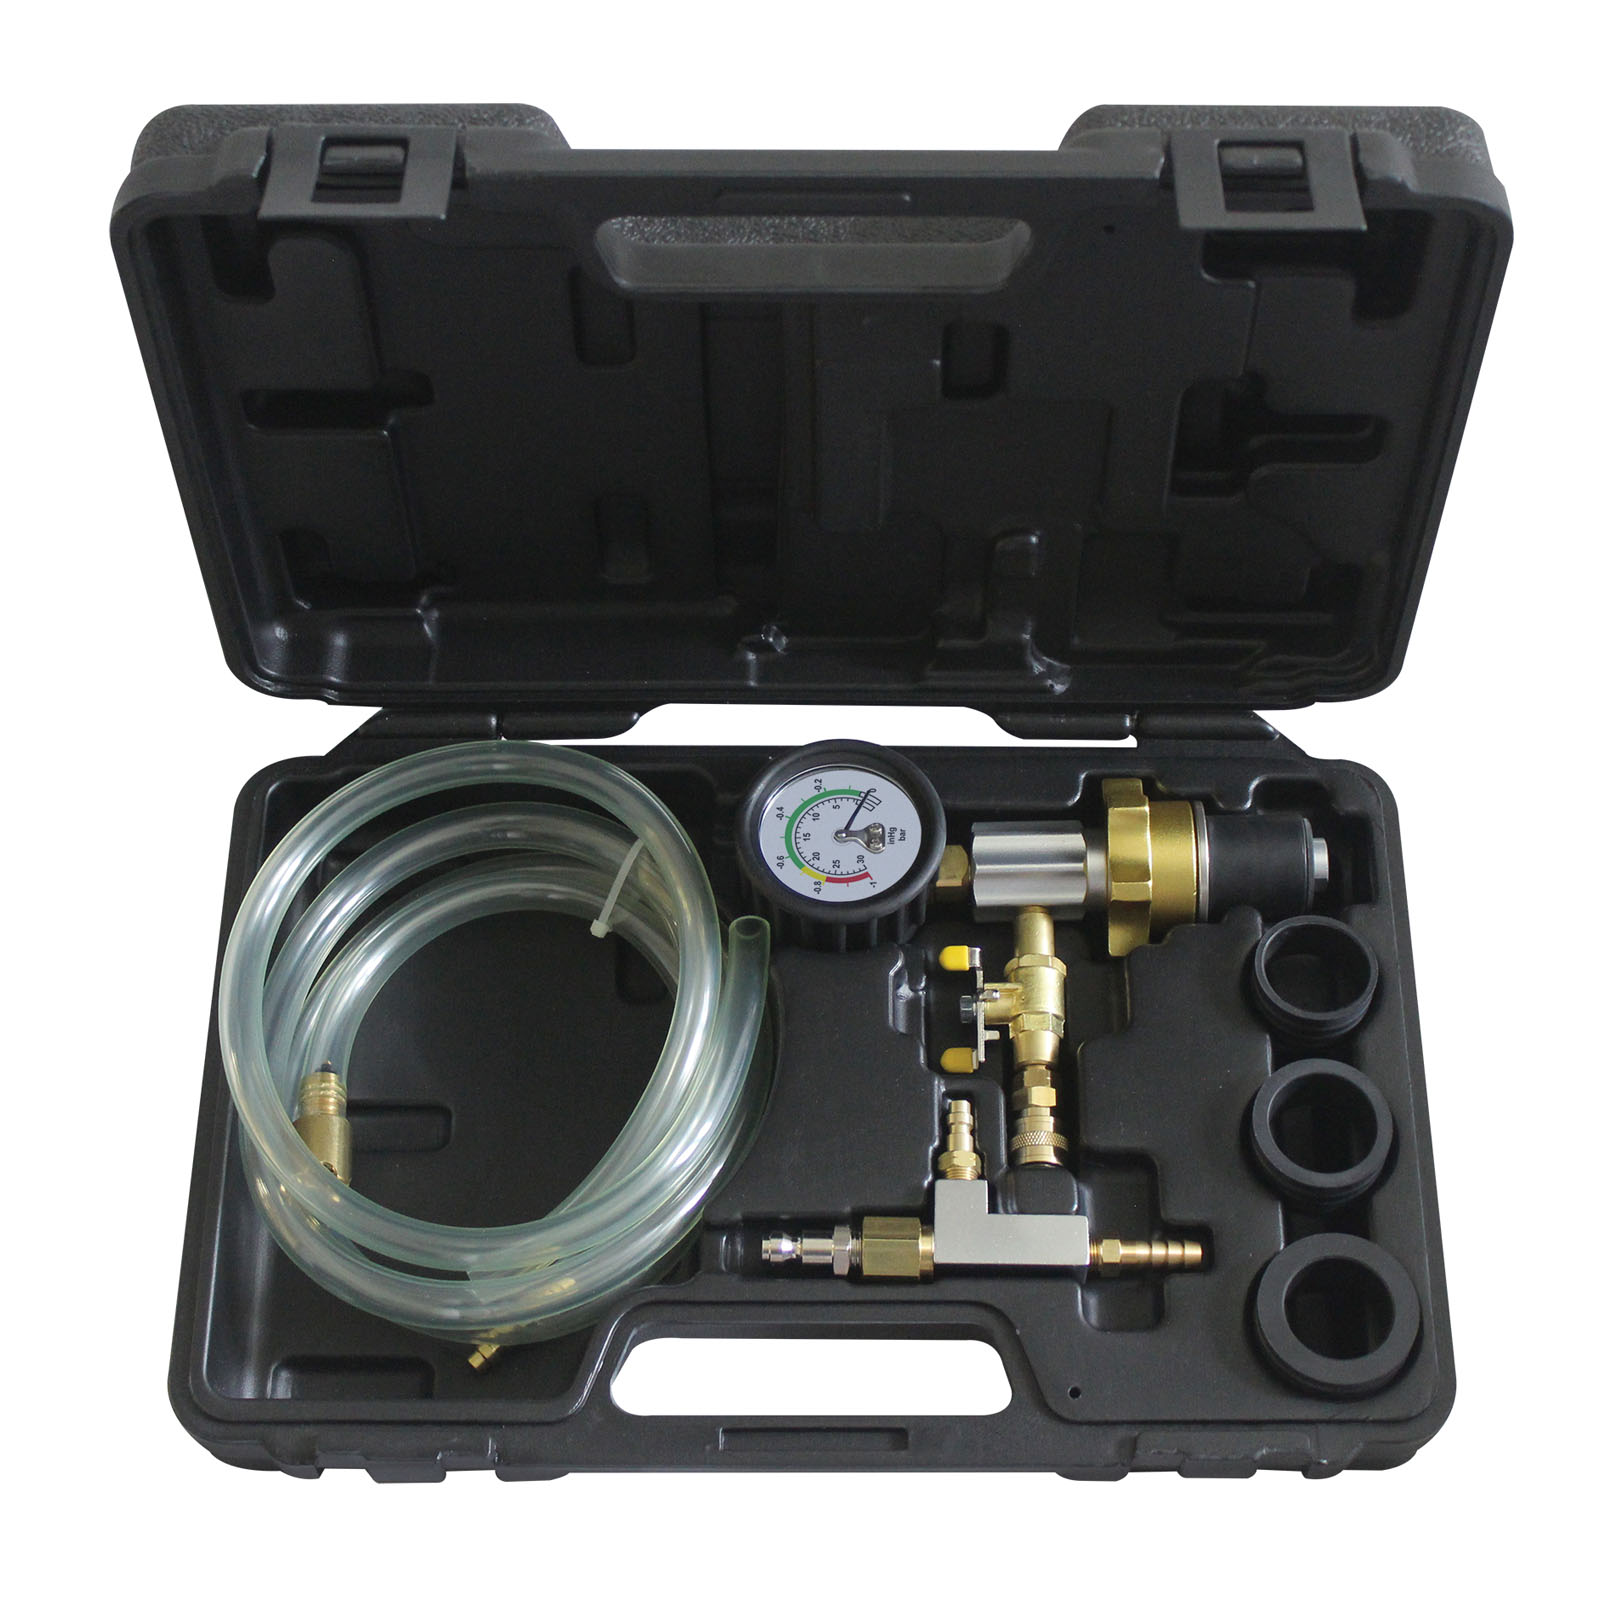 Draper Expert Universal Cooling System Vacuum Purge And Refill Kit 09544 